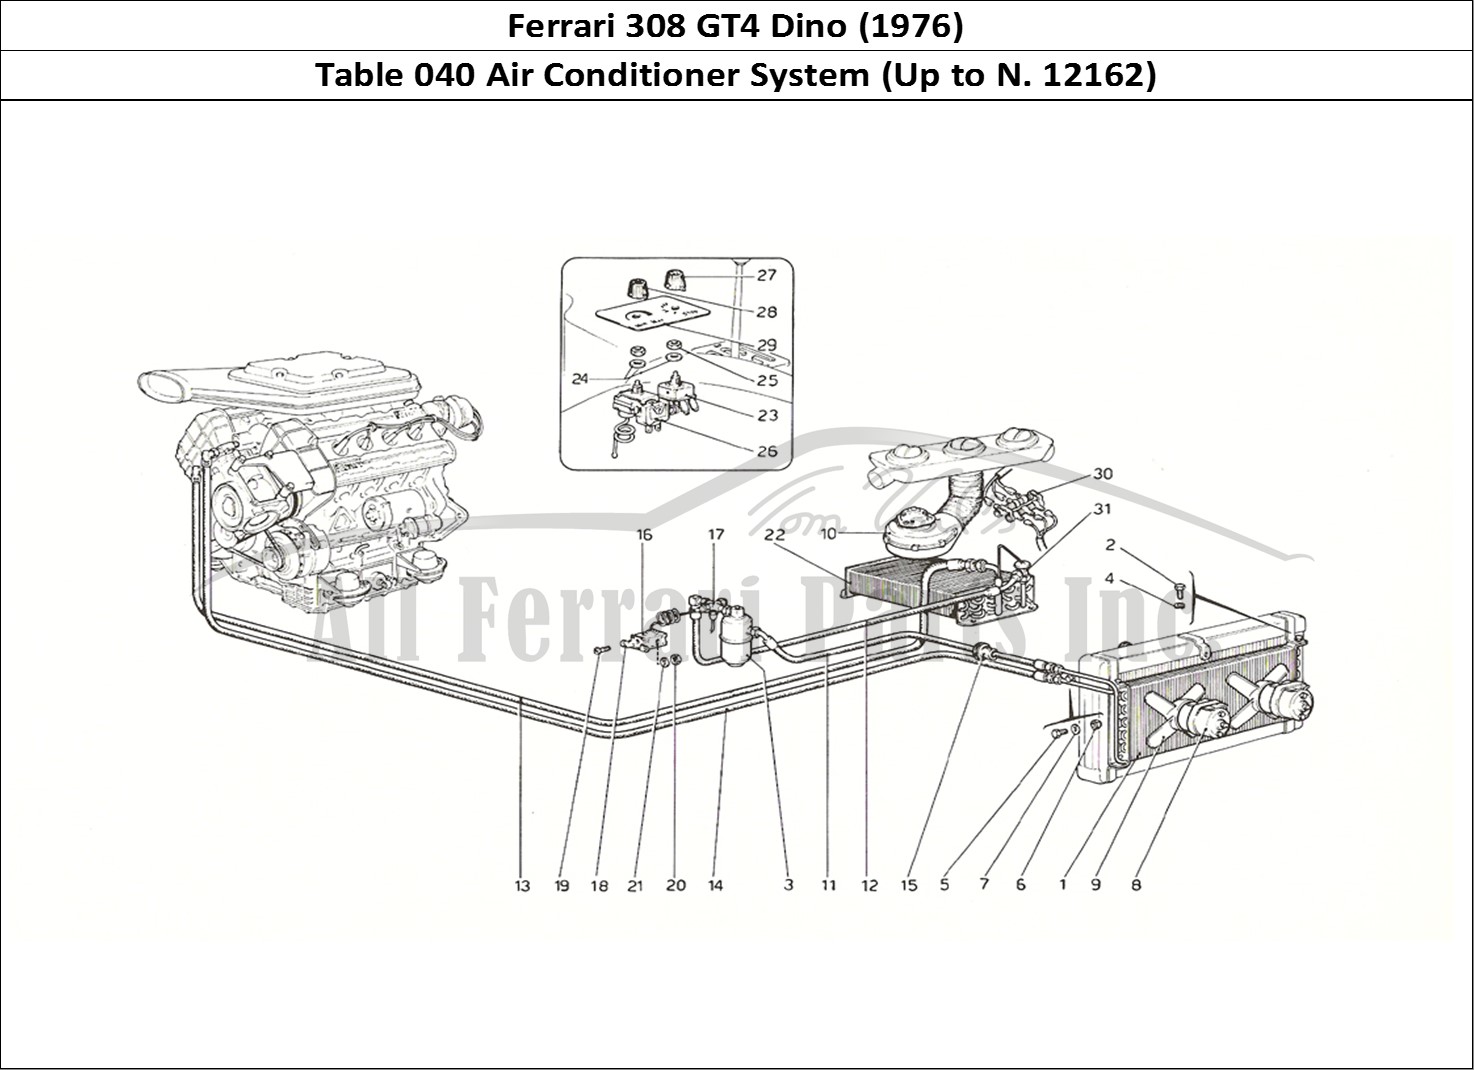 Ferrari Parts Ferrari 308 GT4 Dino (1976) Page 040 Air conditioning system (